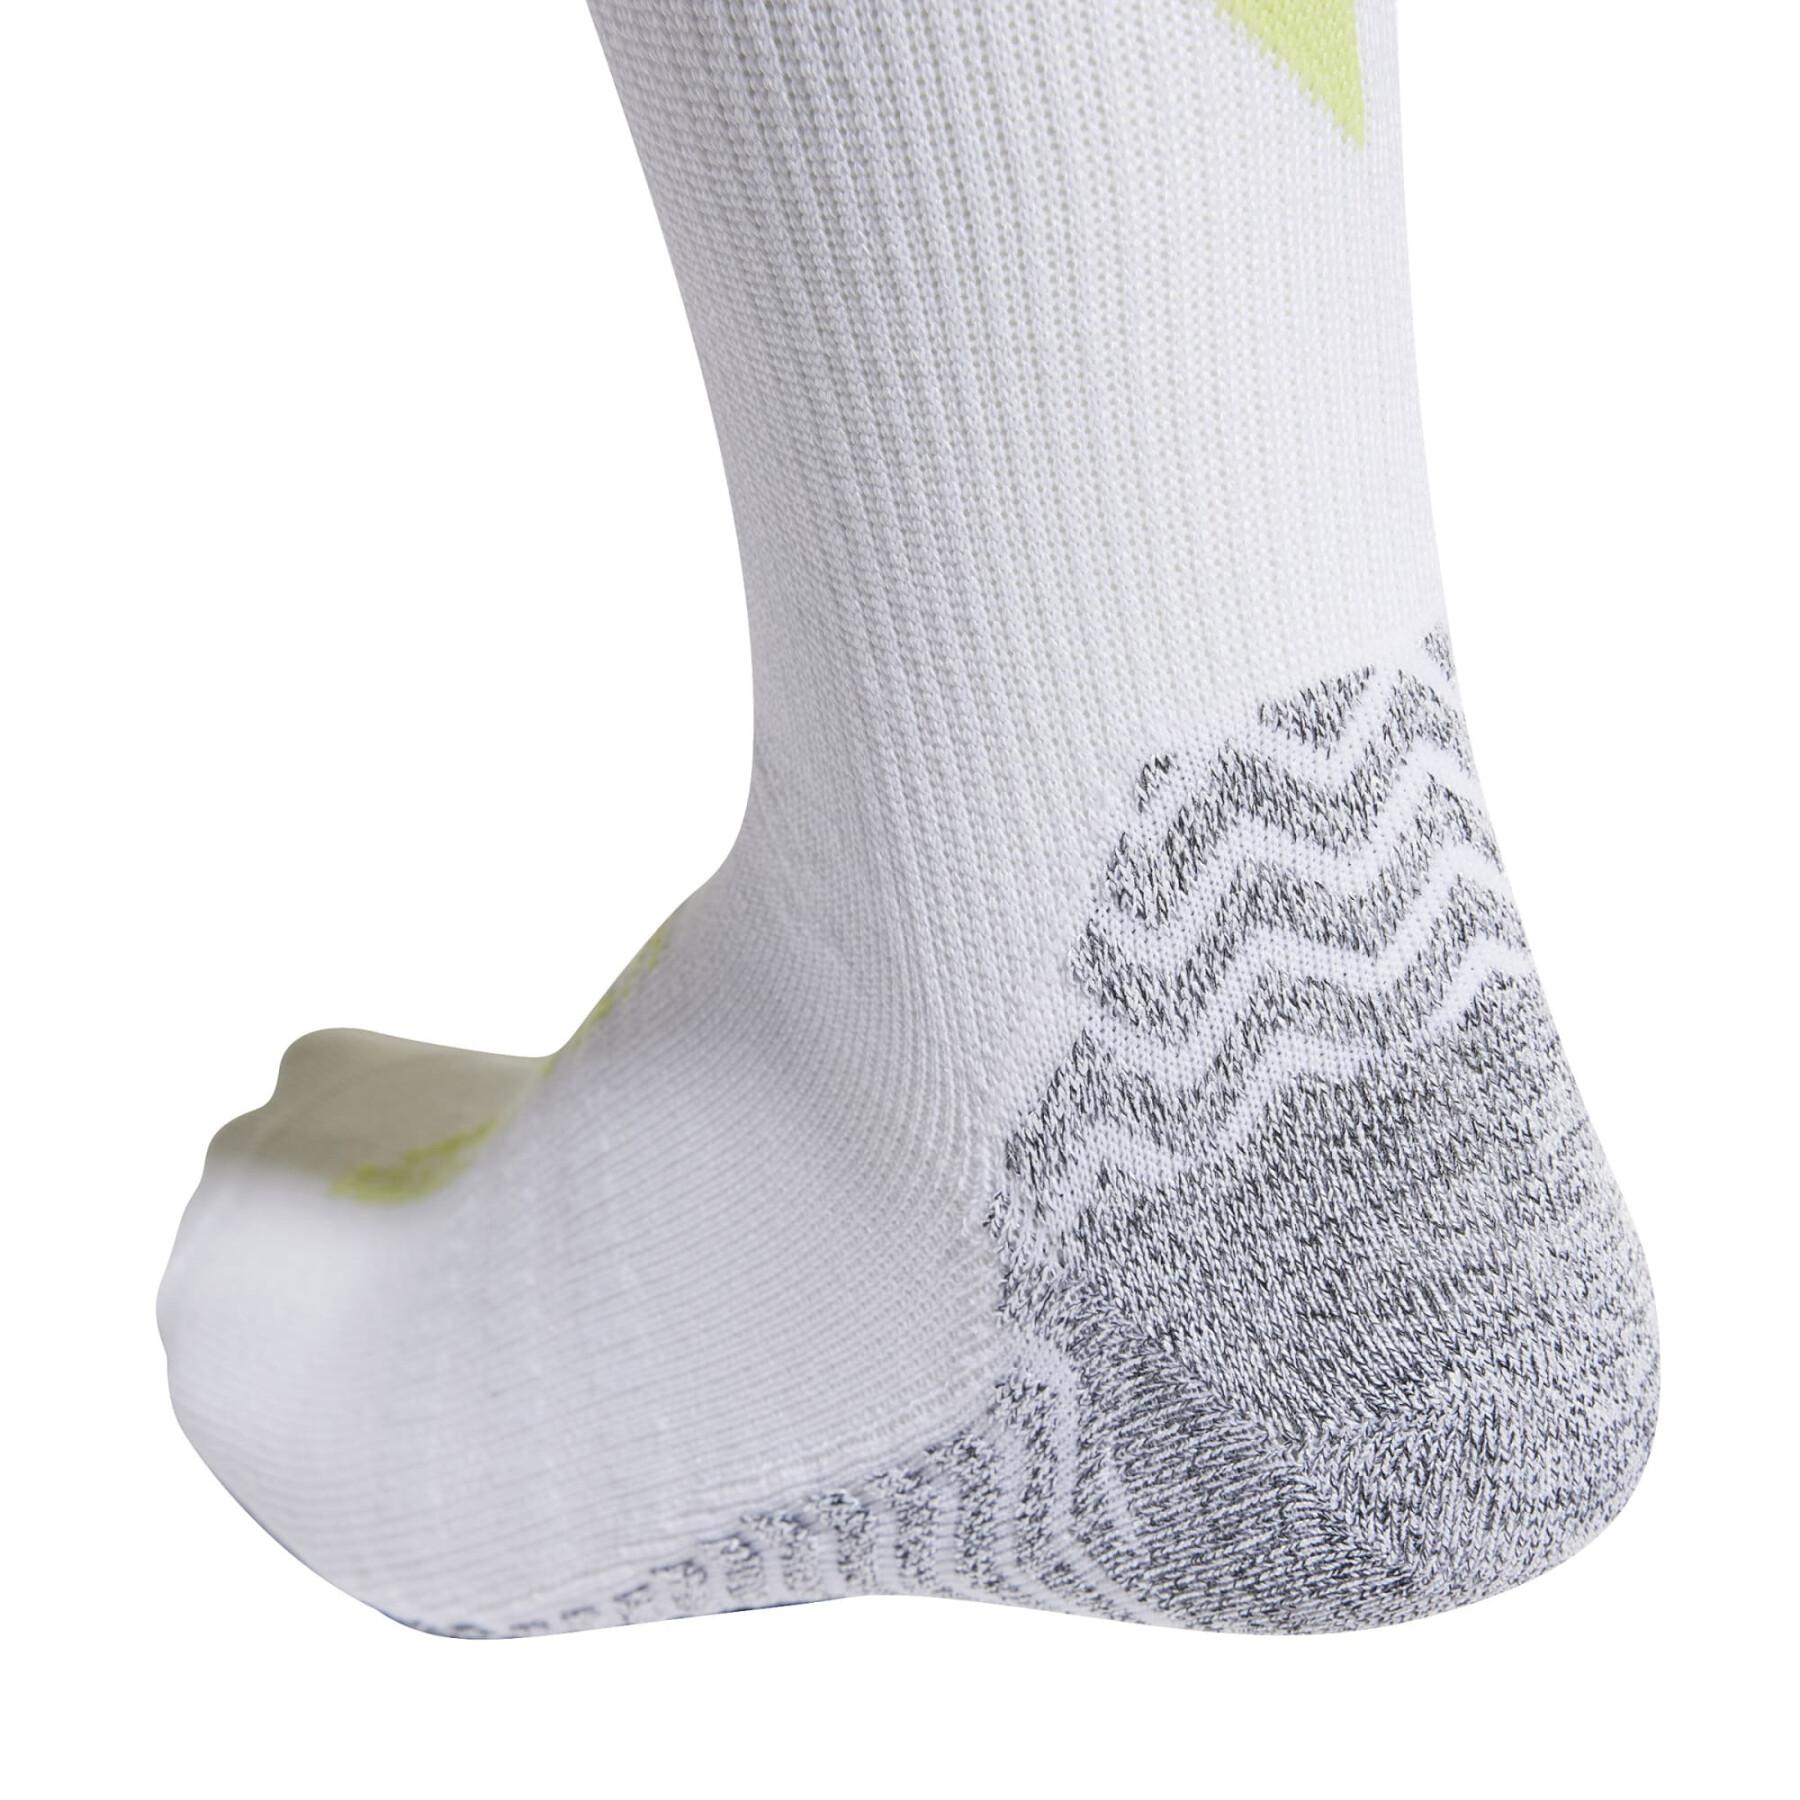 Mid-calf trail running socks adidas Terrex heat.rdy